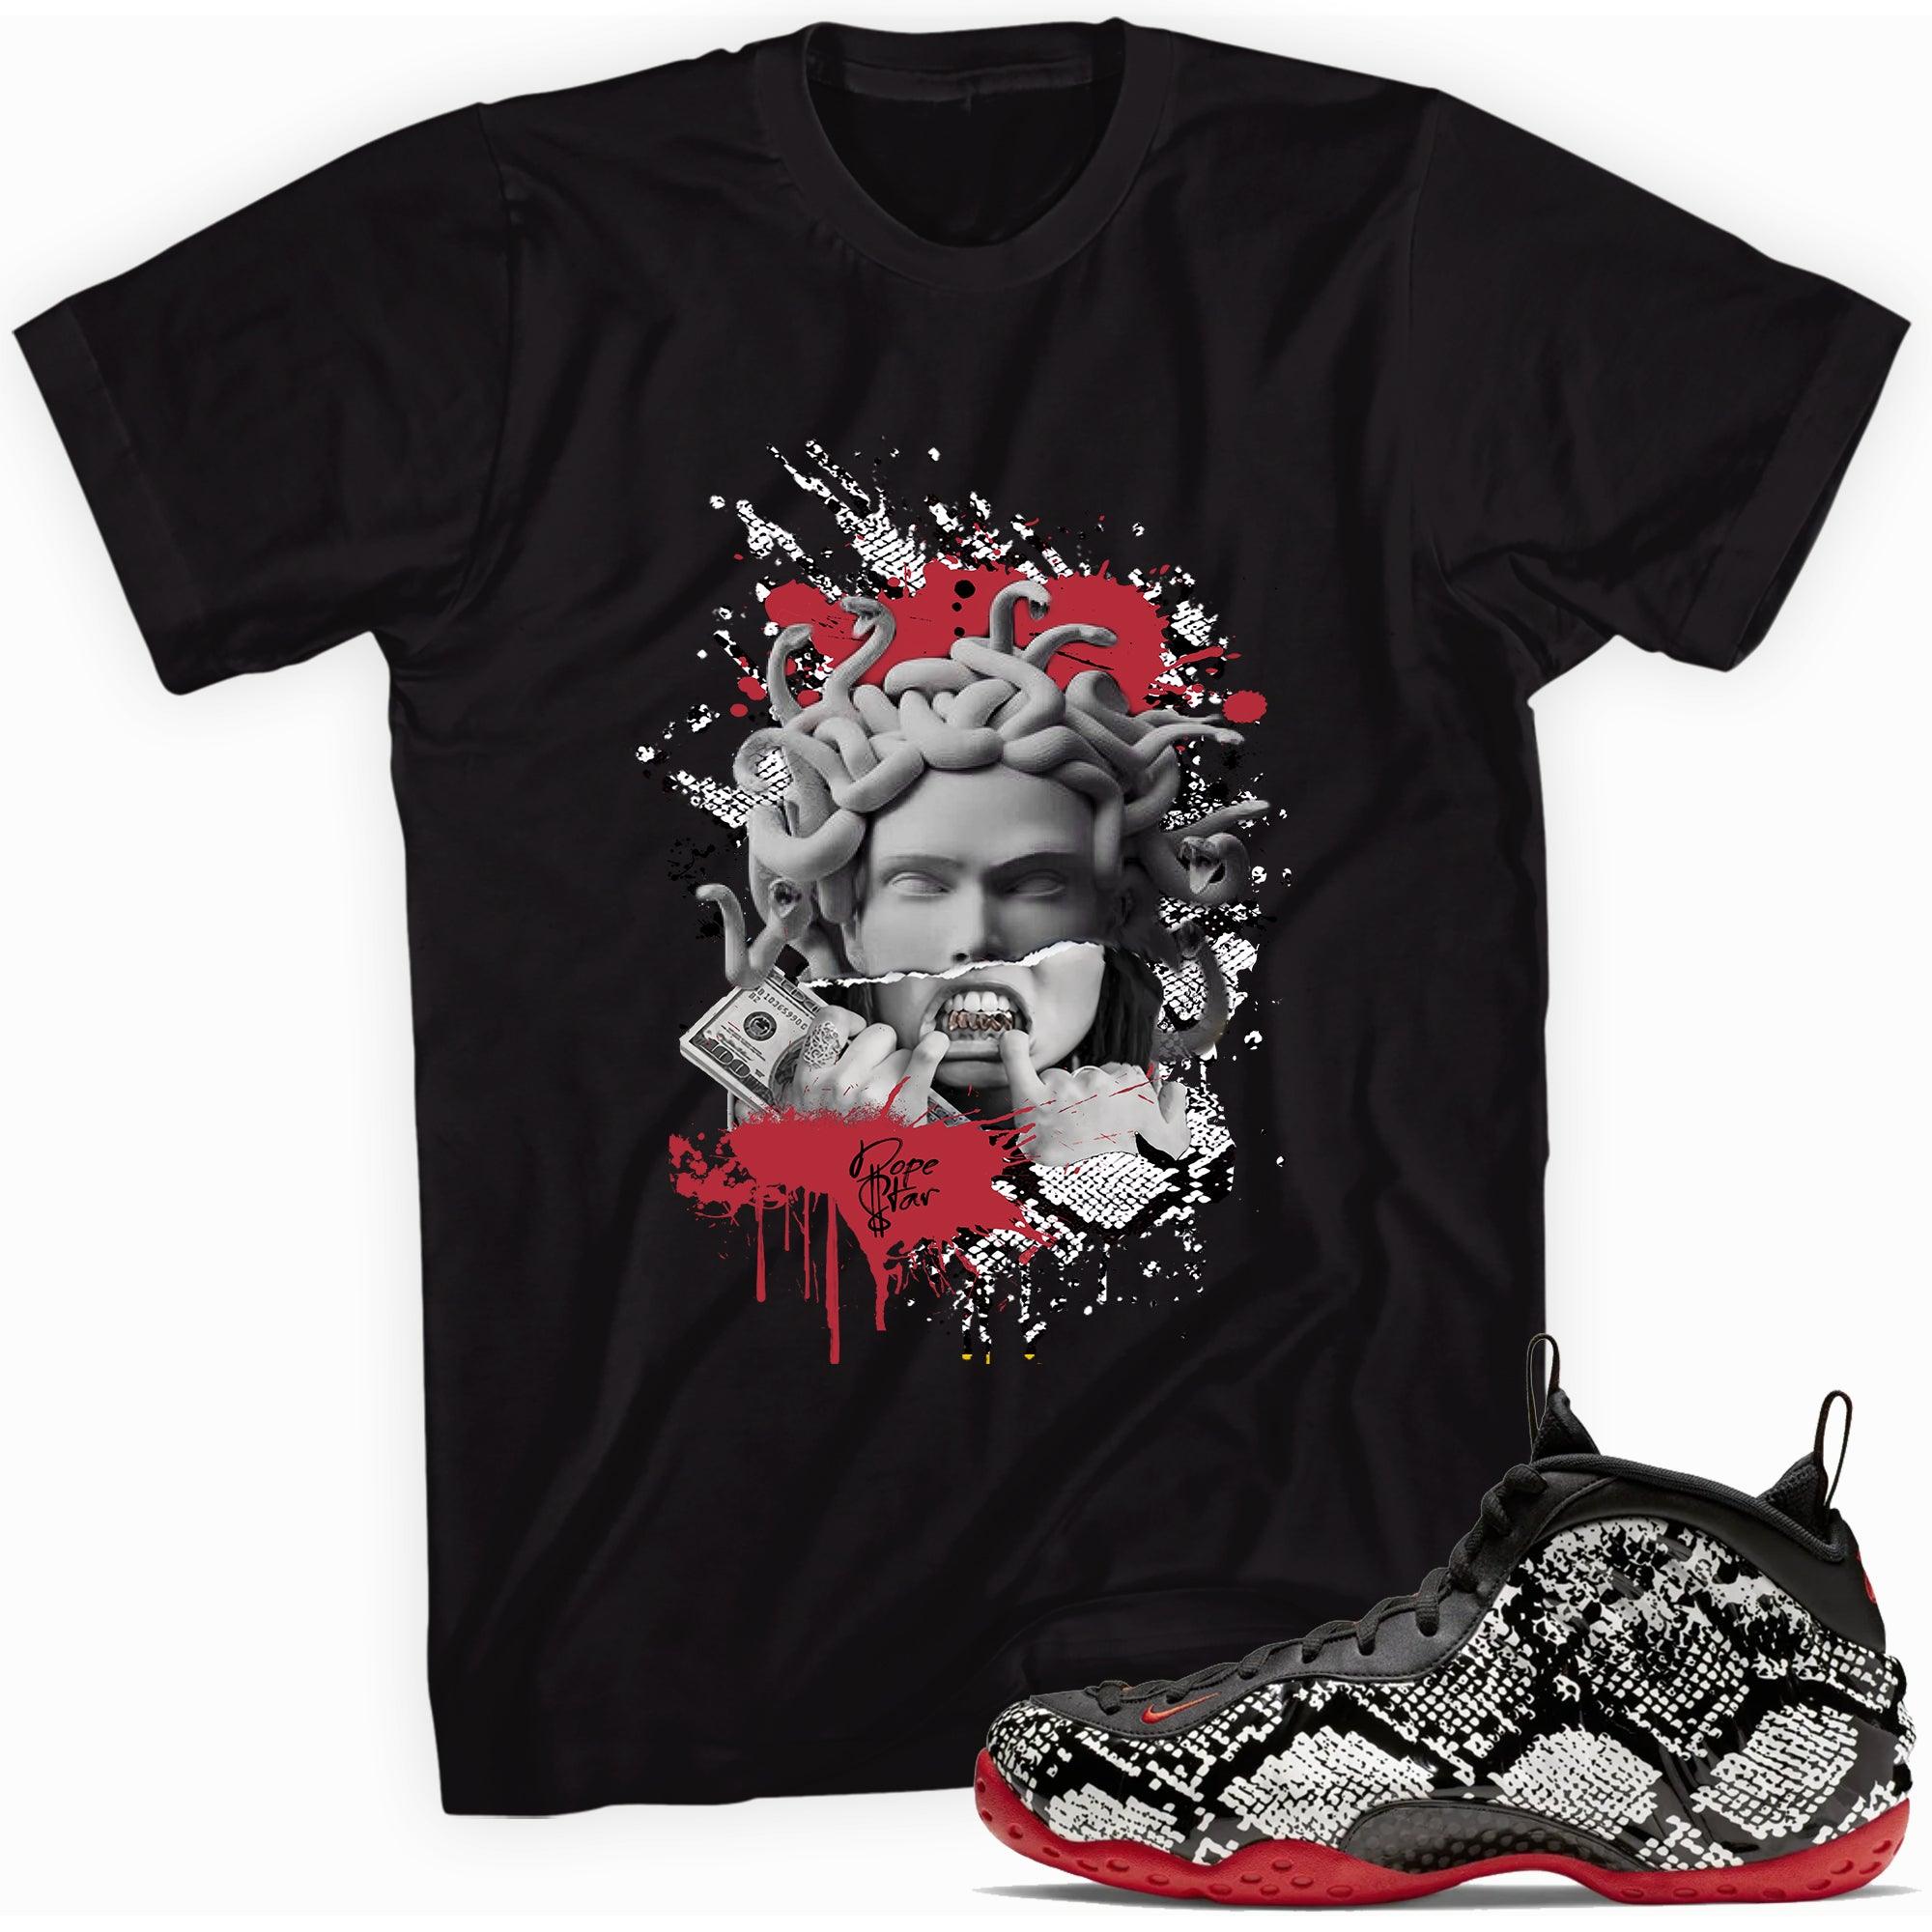 Black Medusa Shirt Nike Air Foamposite One Albino Snakeskin photo